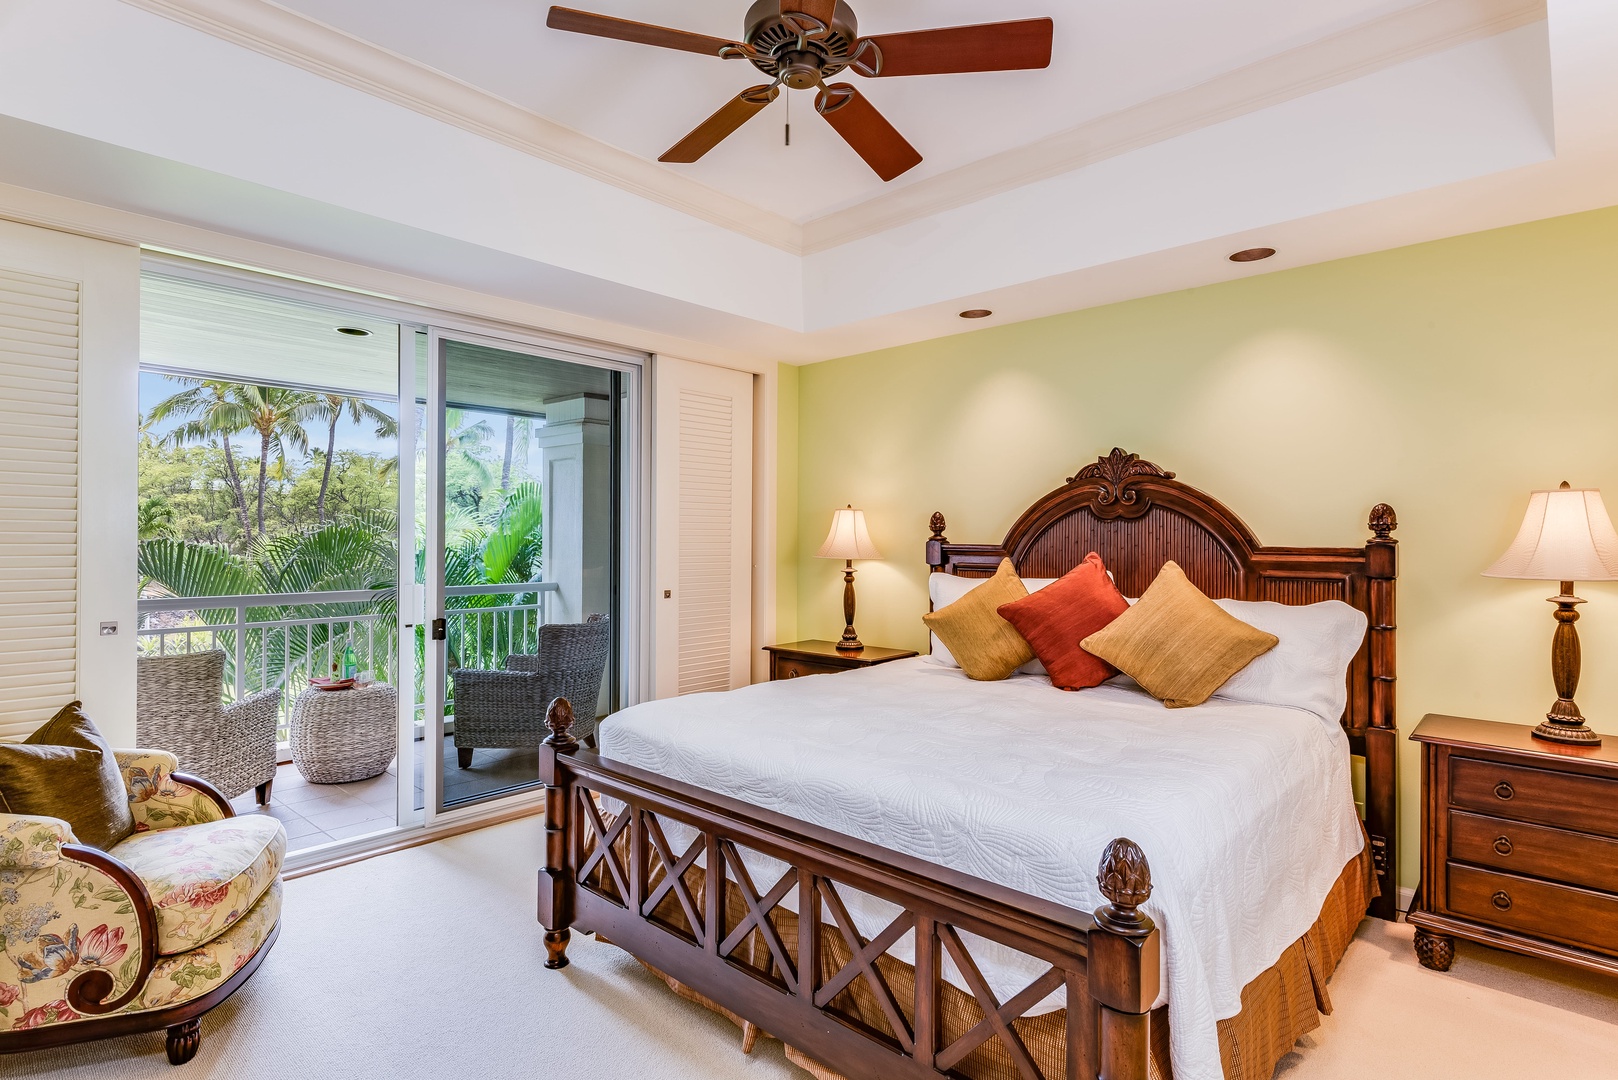 Kamuela Vacation Rentals, The Islands D3 - Alternate View of Second Bedroom